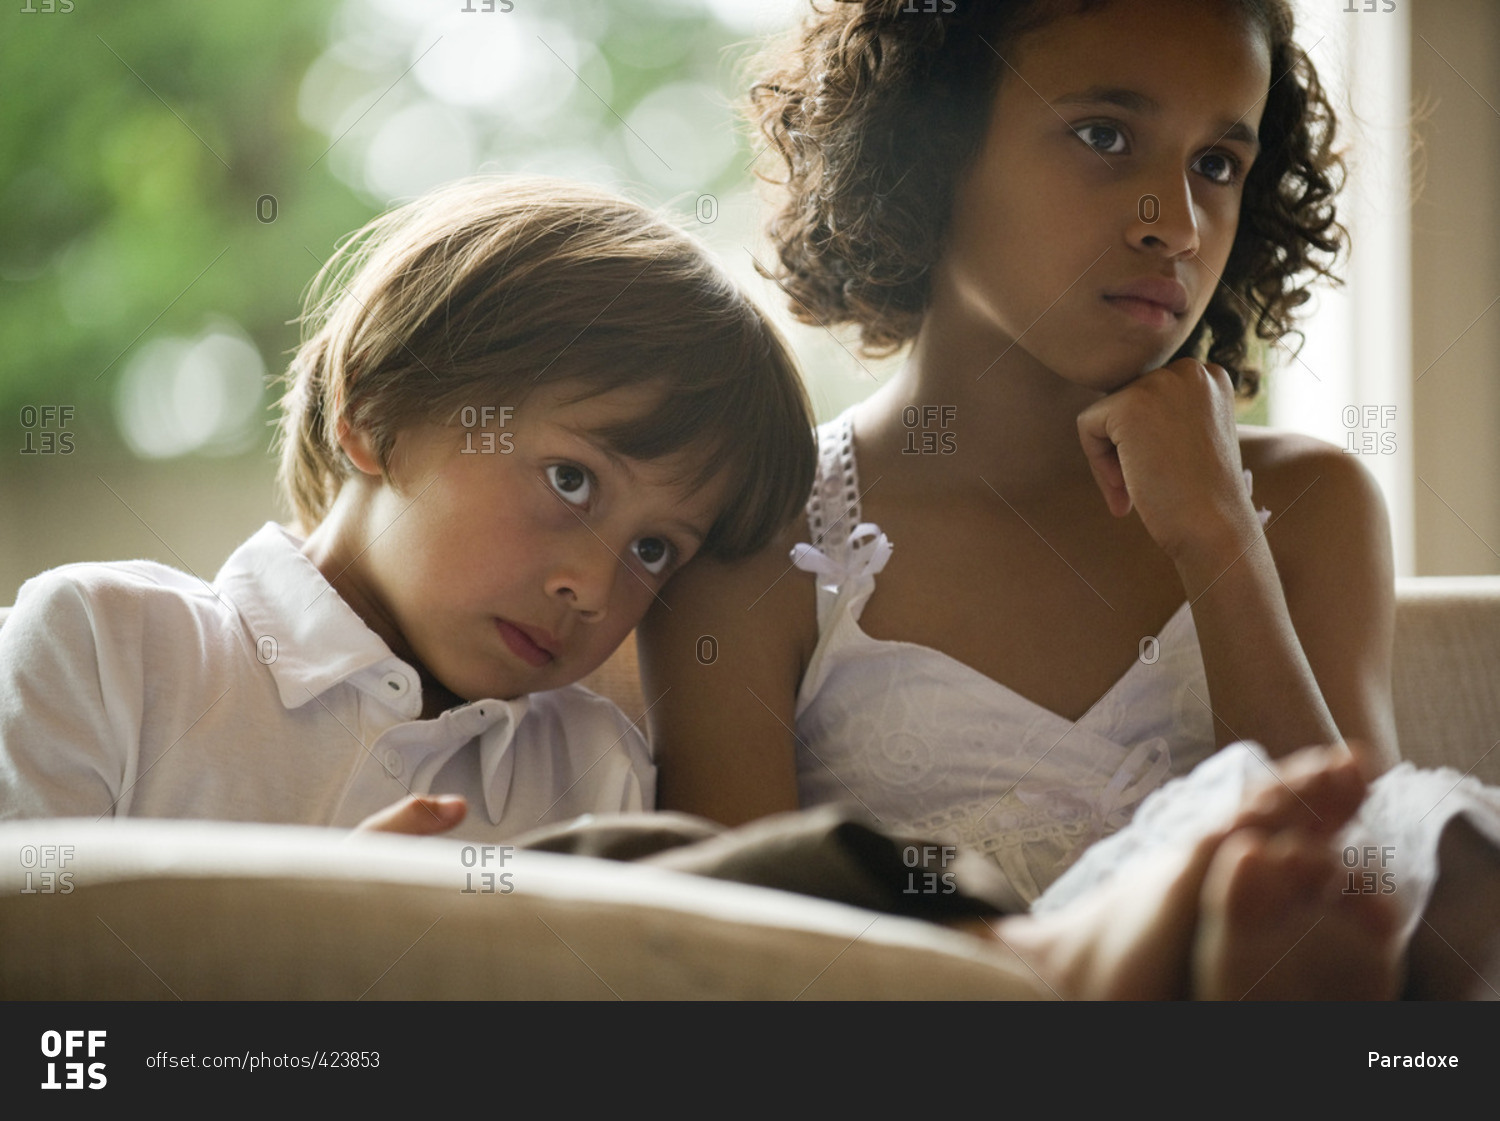 Children watching TV together, boy resting head on sister's shoulder